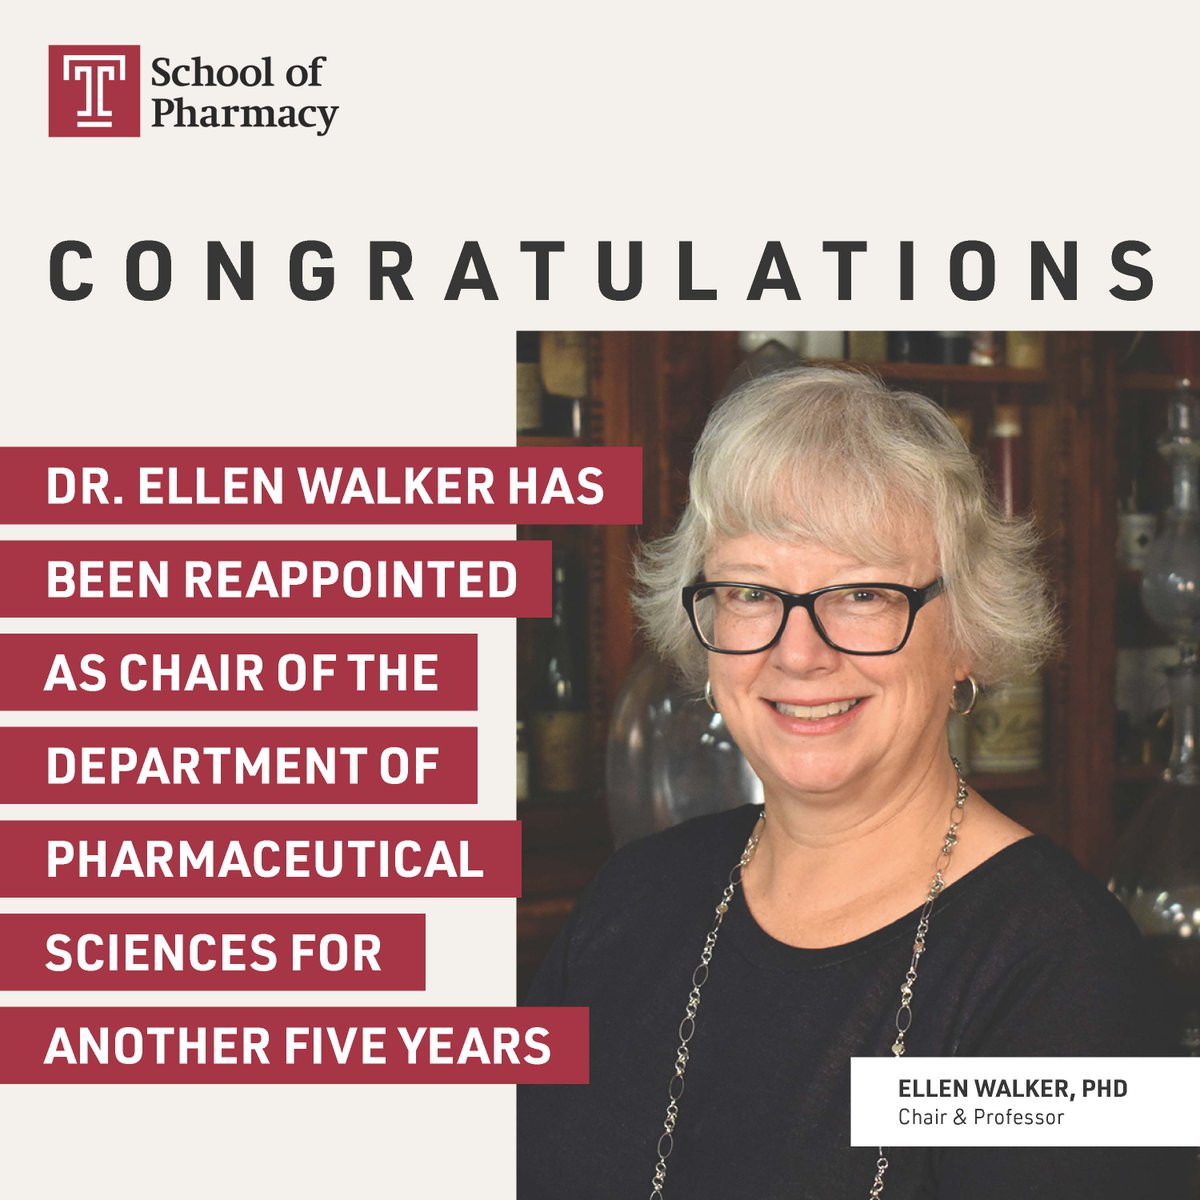 Congrats, Dr. Walker! @templeuniv @csttemple @templehealth @templemedschool #templemade #pharmaceuticalsciences #womeninleadership #womeninscience #highereducation #womeninstem